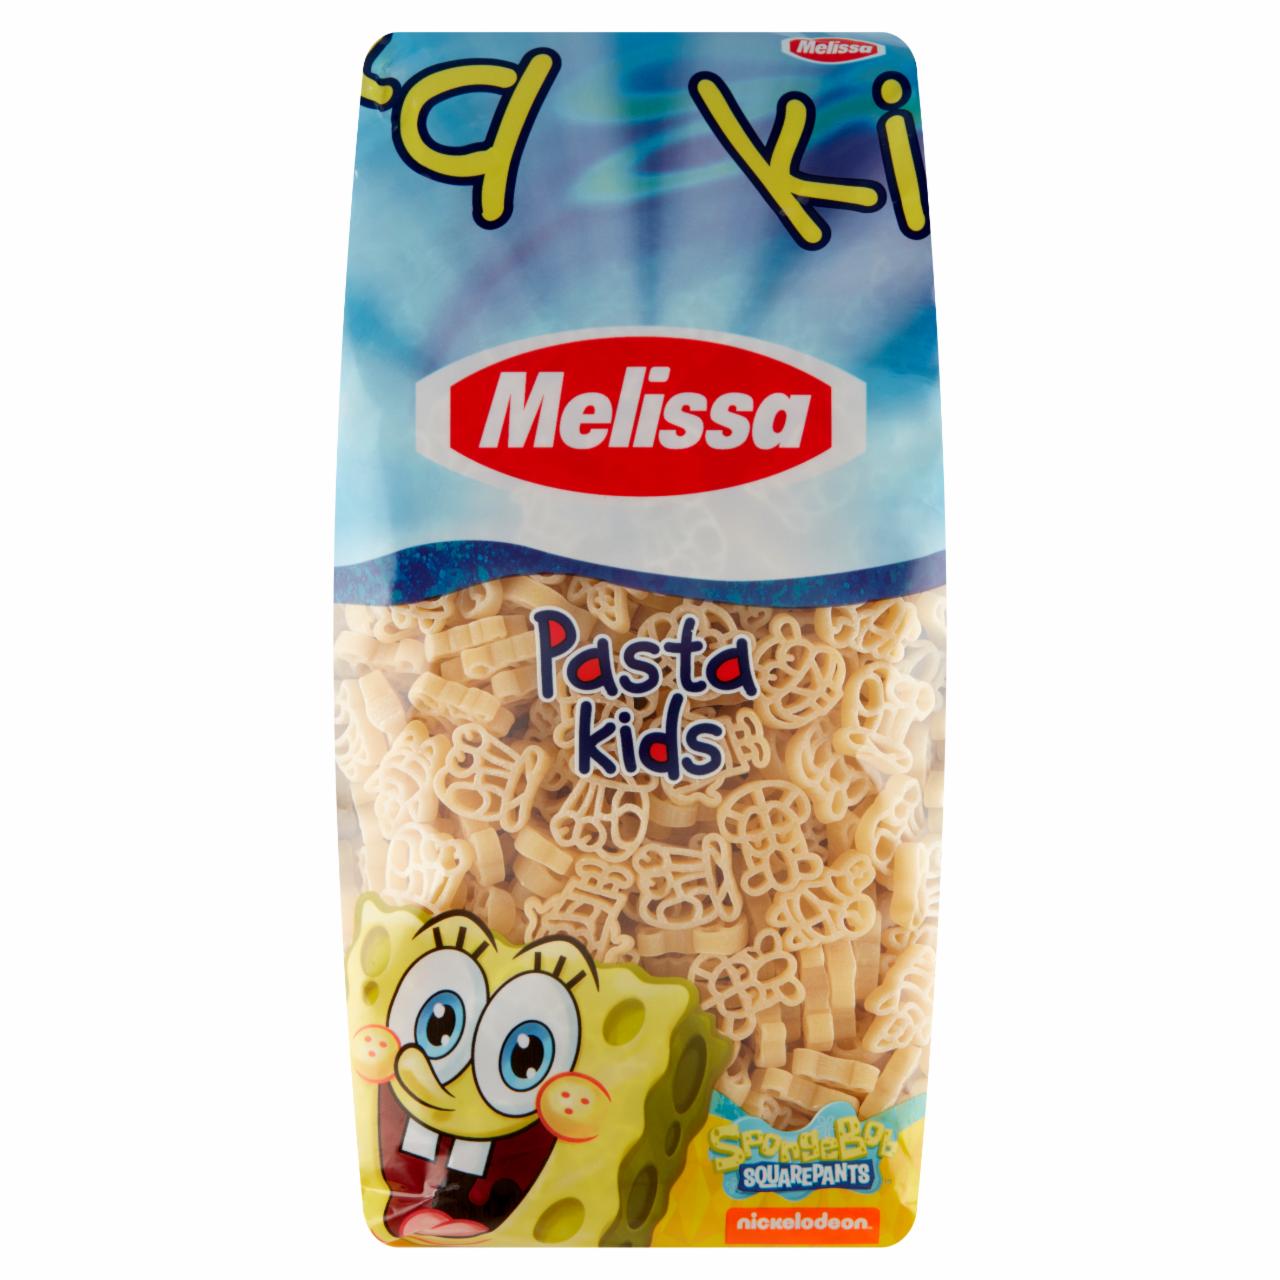 Zdjęcia - Melissa Pasta Kids Sponge Bob Squarepants Makaron 500 g